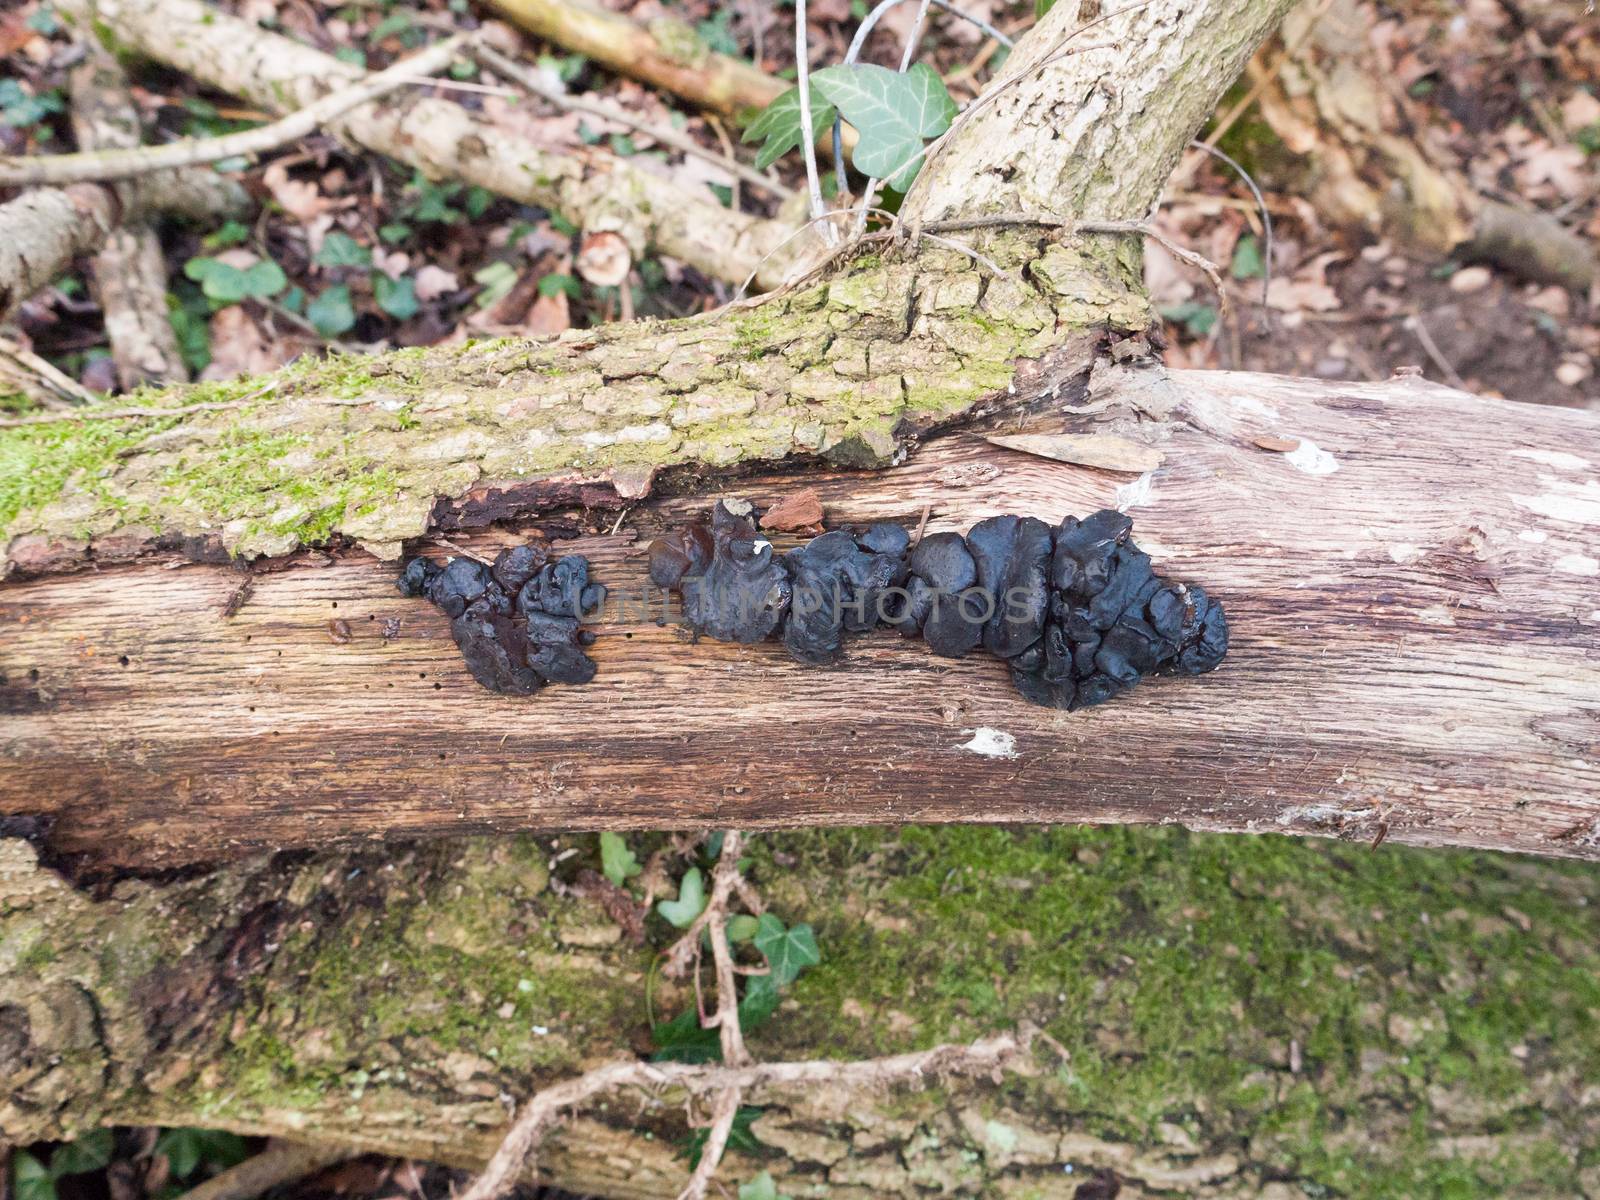 close up black jelly fungus tree branch - Exidia plana Donk by callumrc